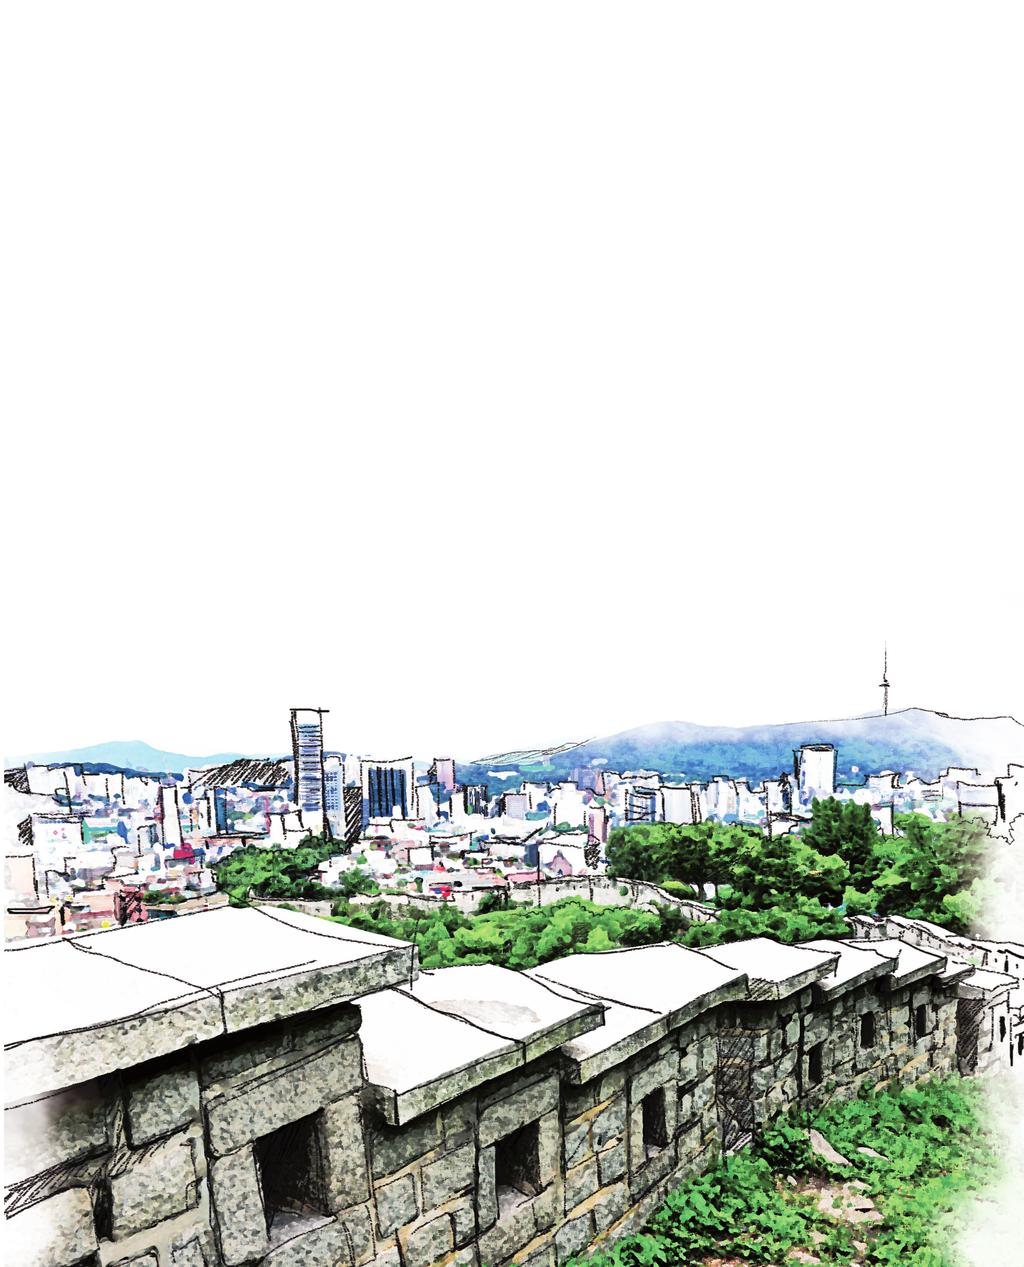 WORLD &CITIES 세계와 도시 특집 도시의 보존과 개발 : 과거 현재 미래가 공존하기 위한 노력 기획 서울시 국제협력사업 추진을